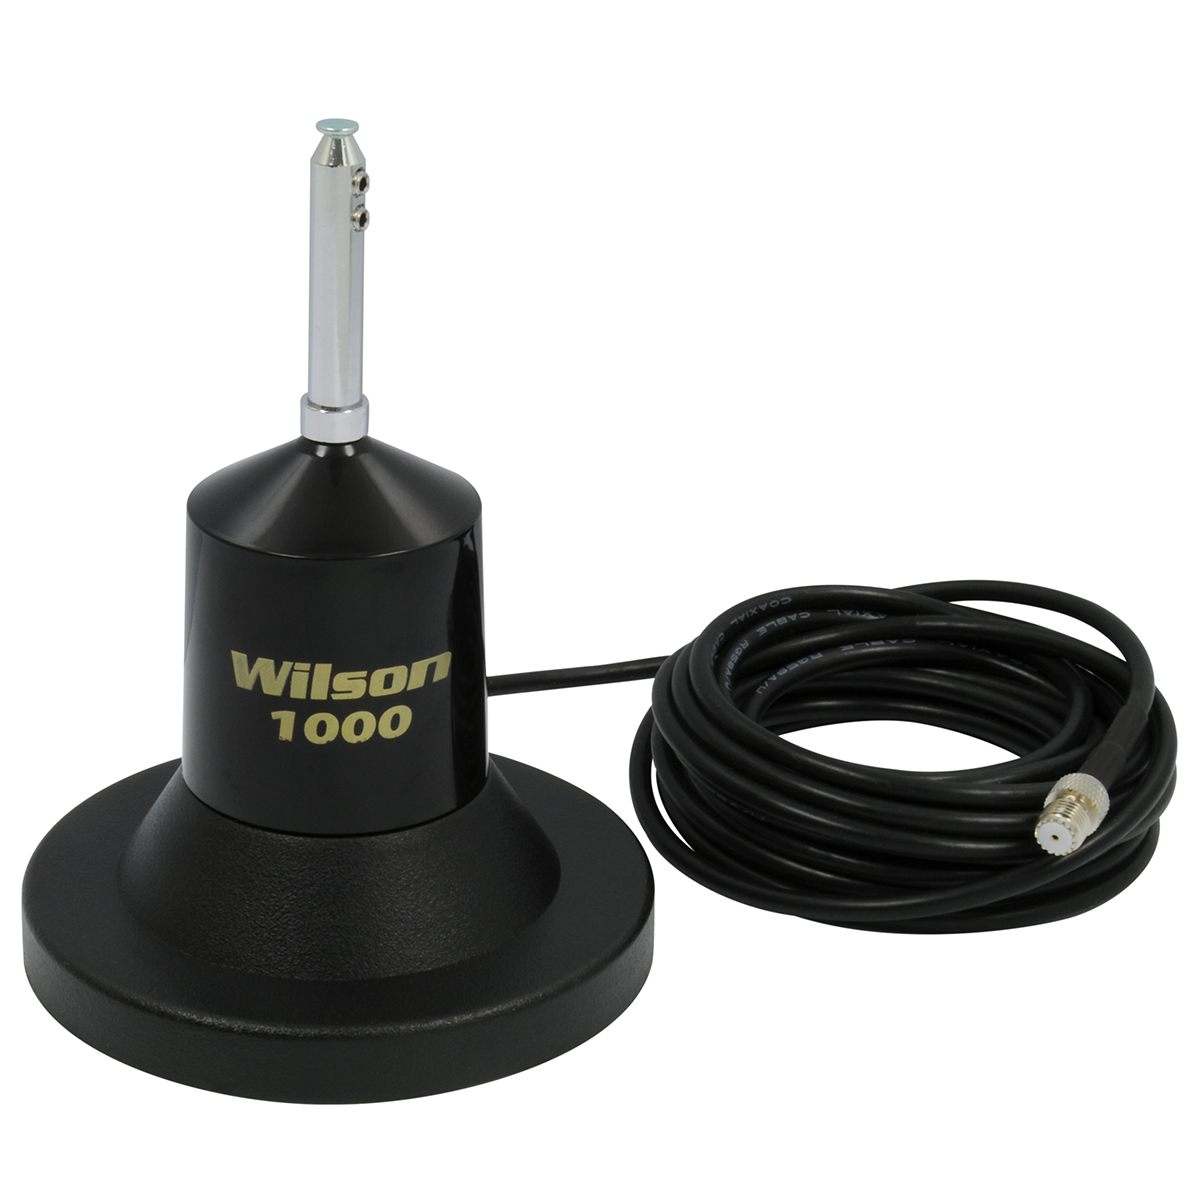 Wilson Antennas W1000 Series Magnet Mount Mobile CB Antenna Kit with 62